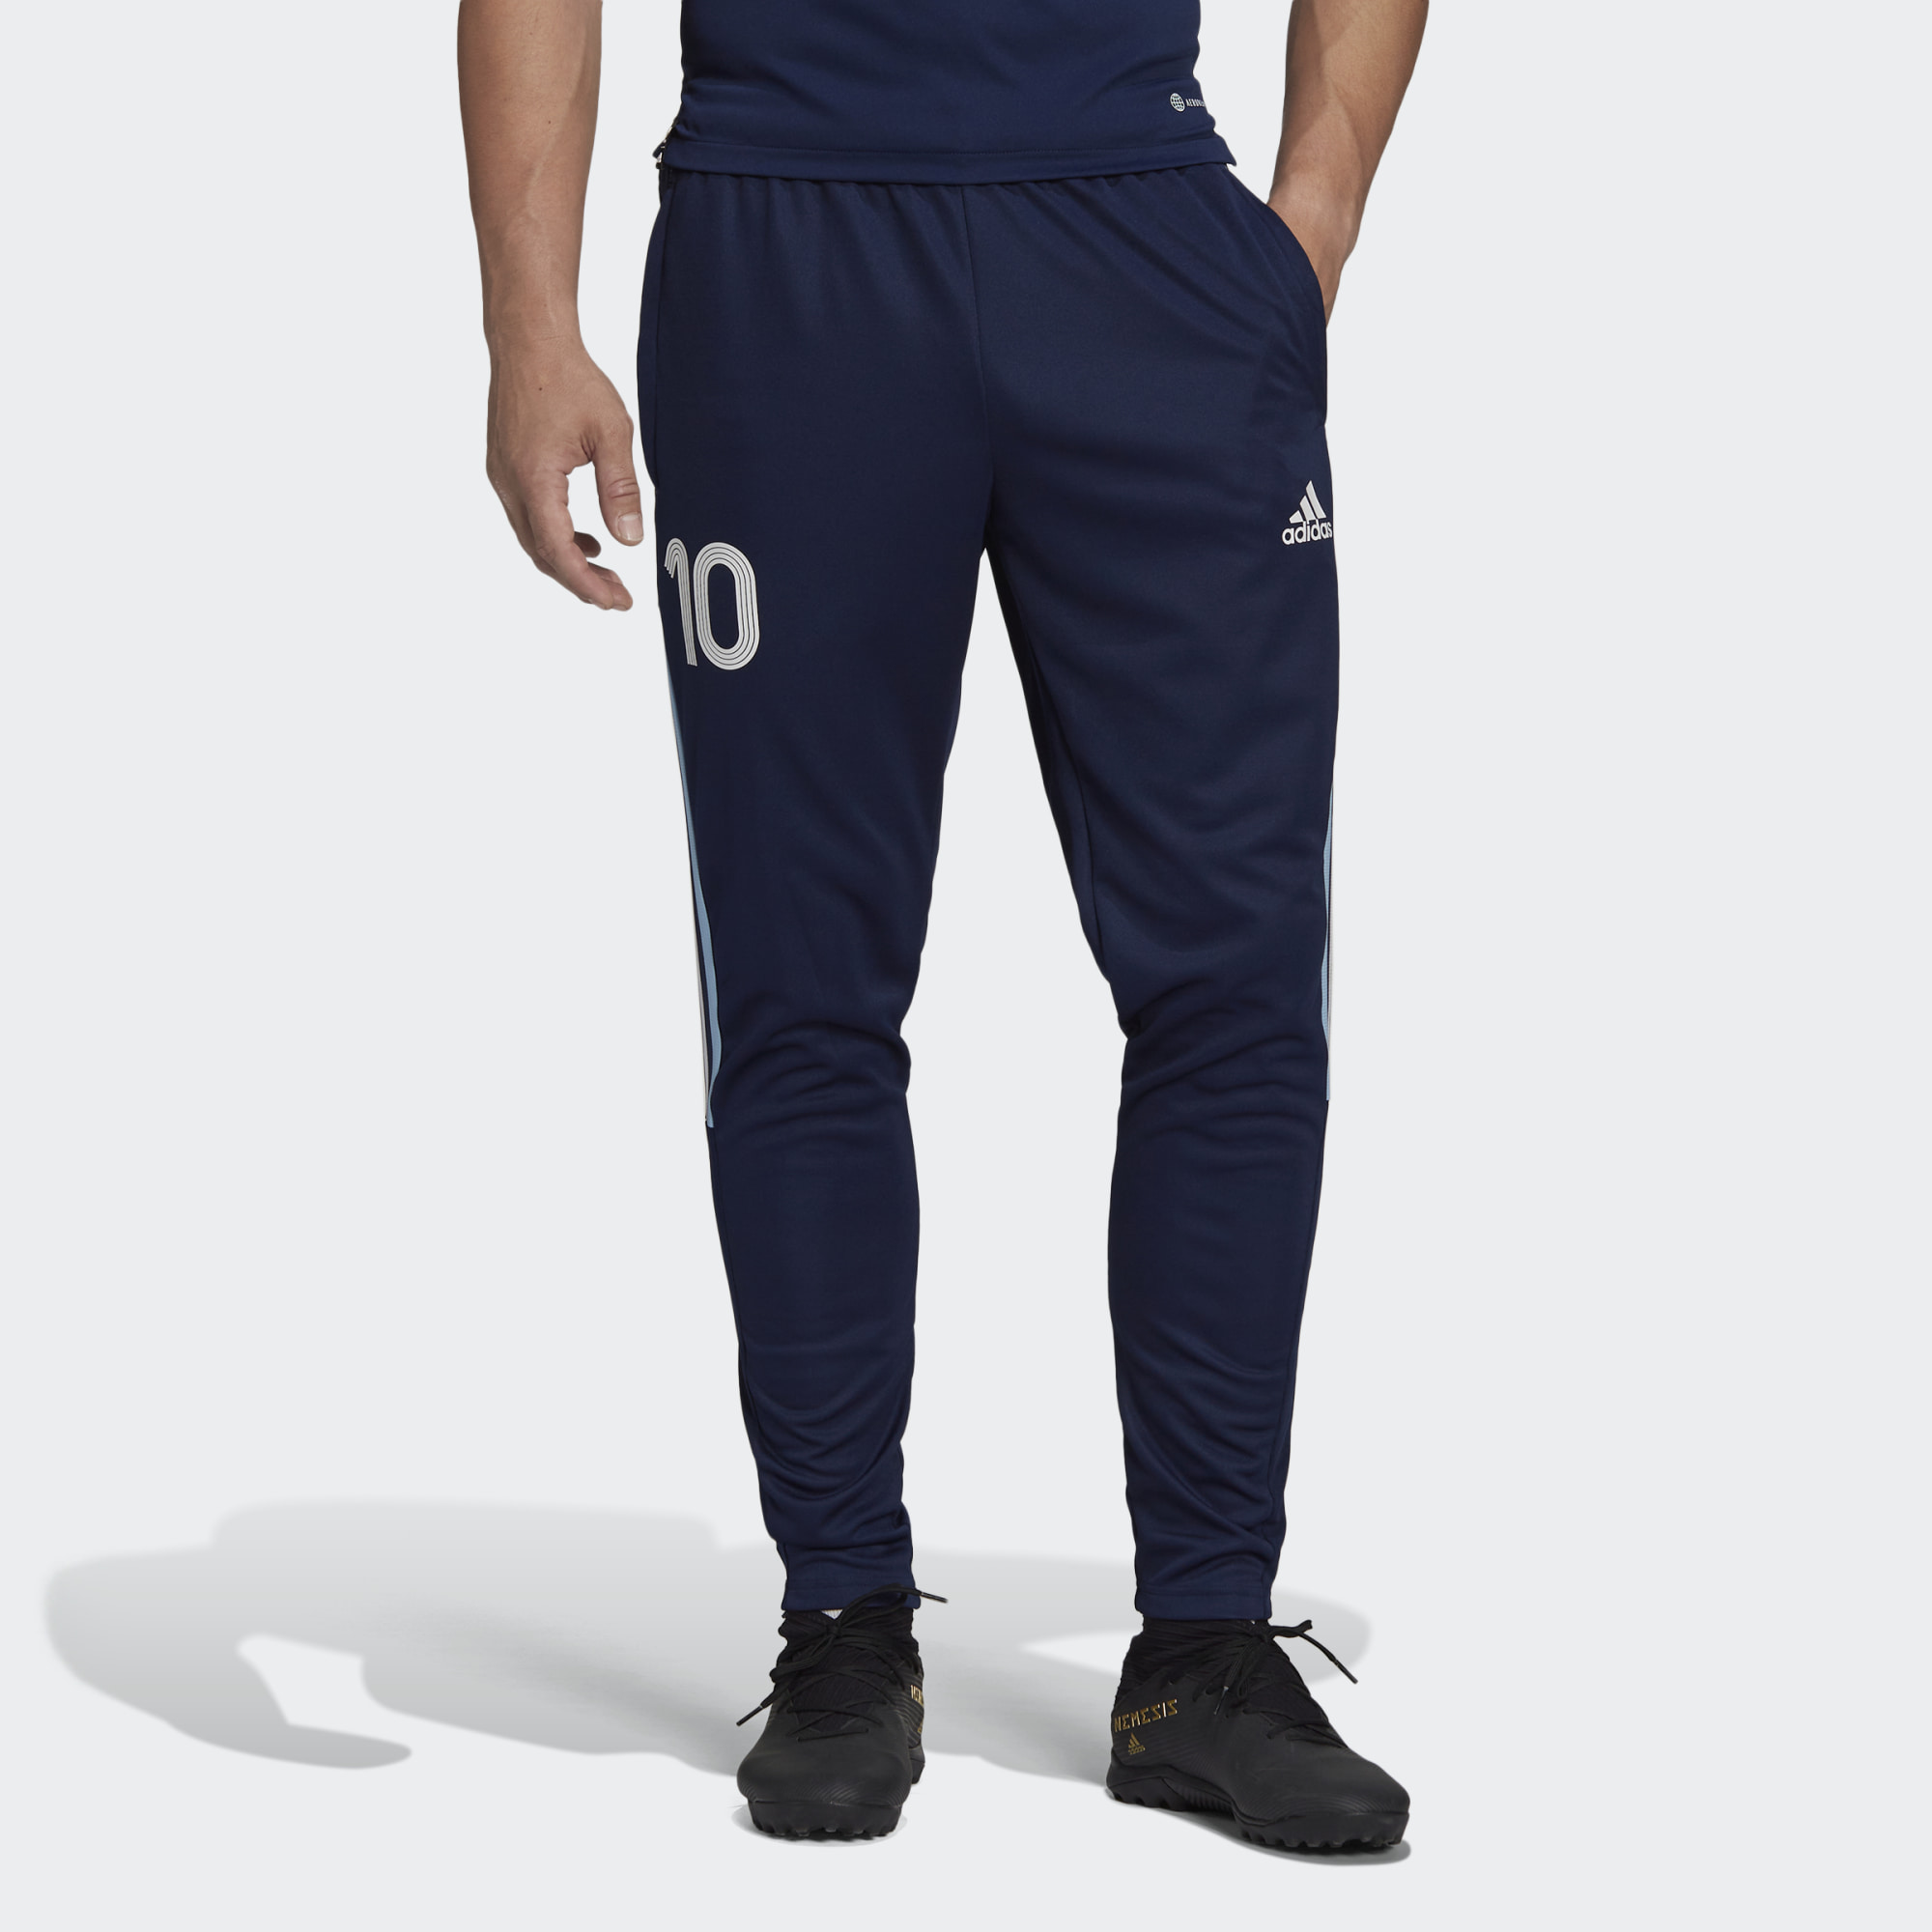 фото Спортивные брюки мужские adidas messi tk pant синие xl